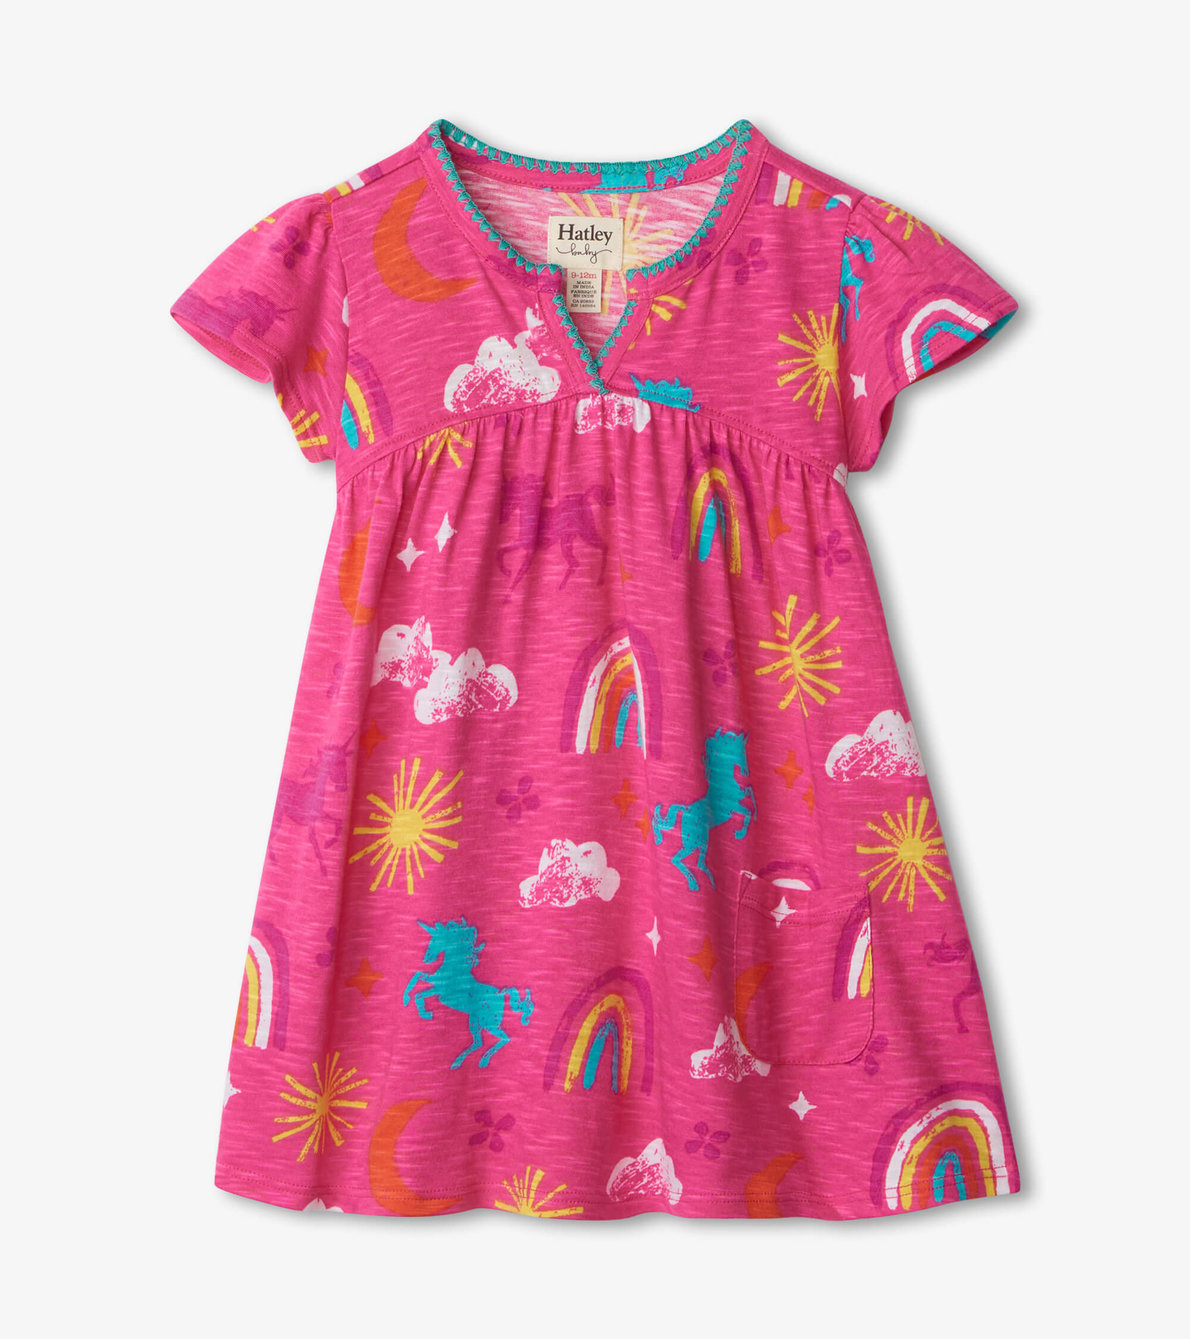 View larger image of Unicorns & Rainbows Baby Puff Dress